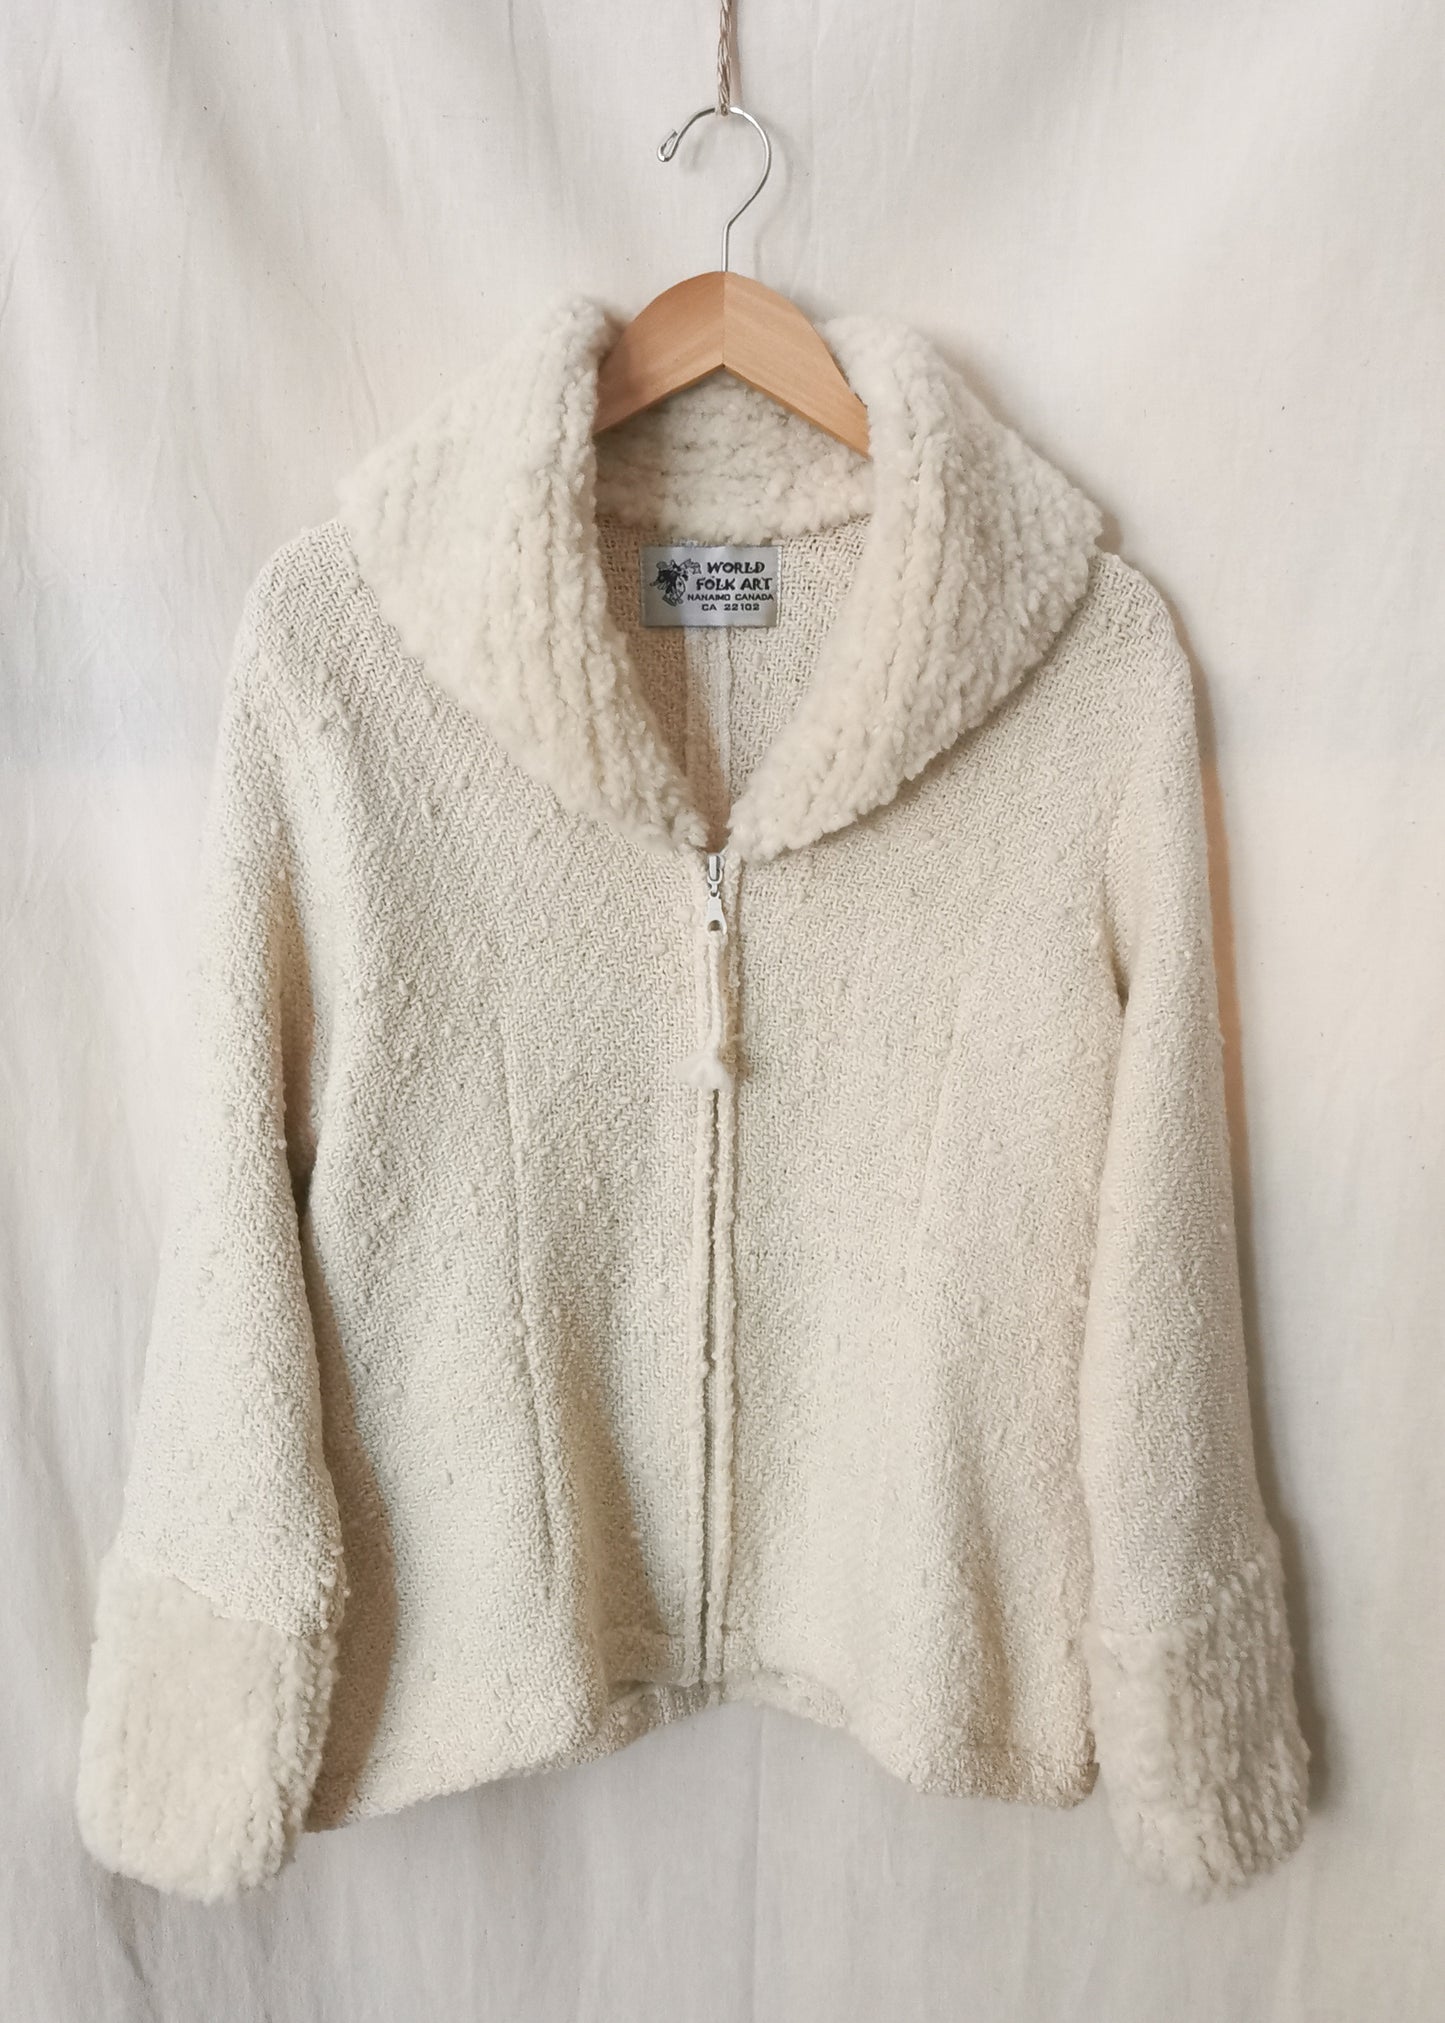 World Folk Art Wool Sweater/Jacket (L)